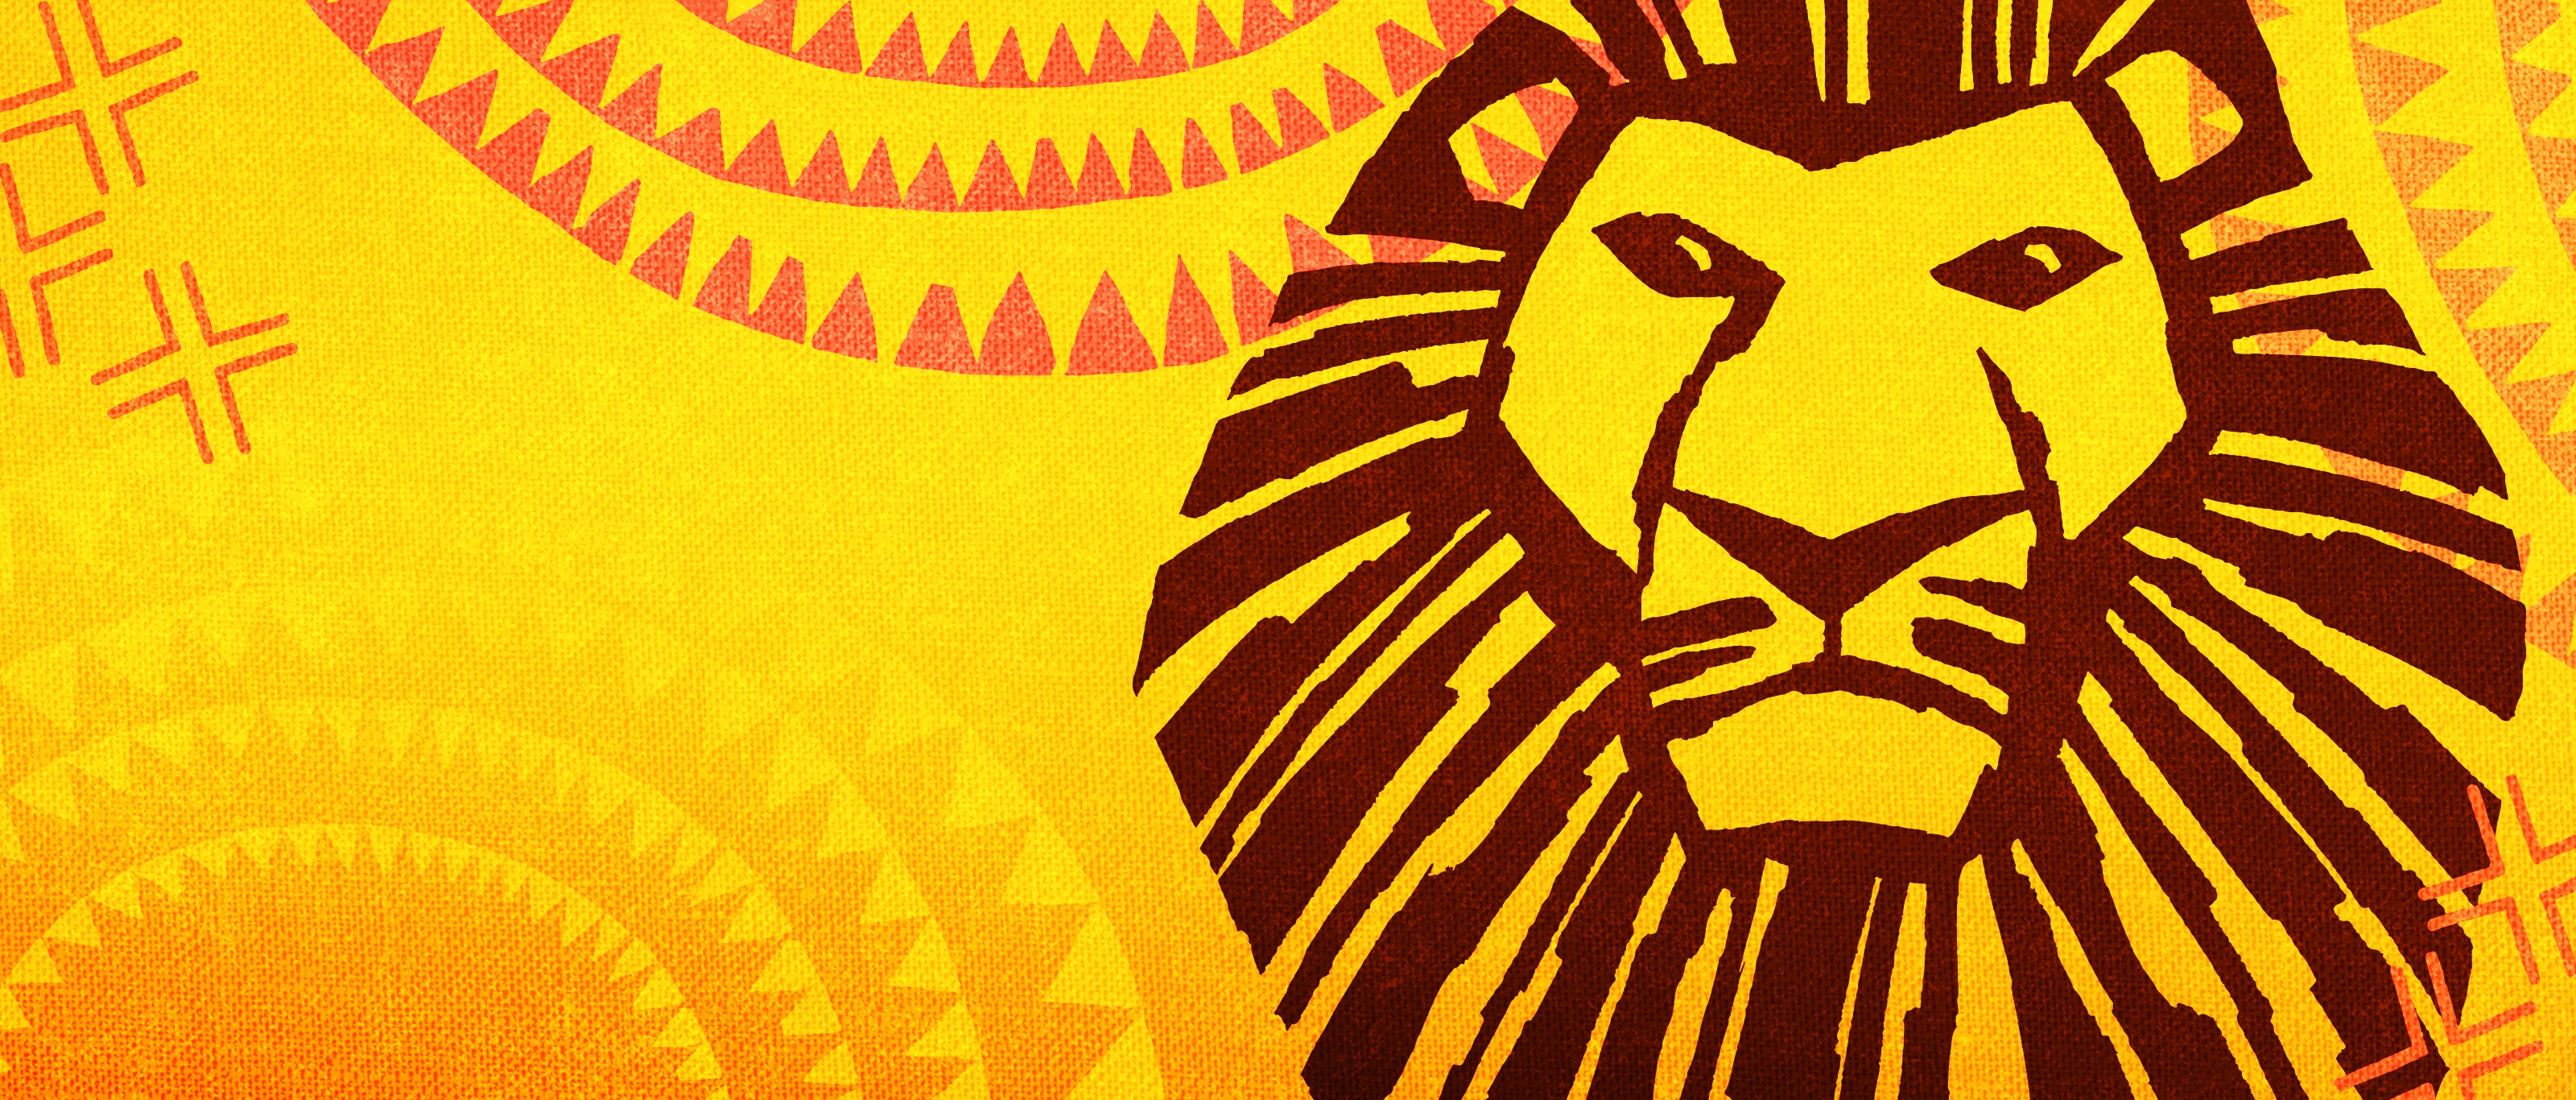 welvaart Aankoop Soepel The Lion King Tickets, Lyceum Theatre, London | Disney Tickets UK